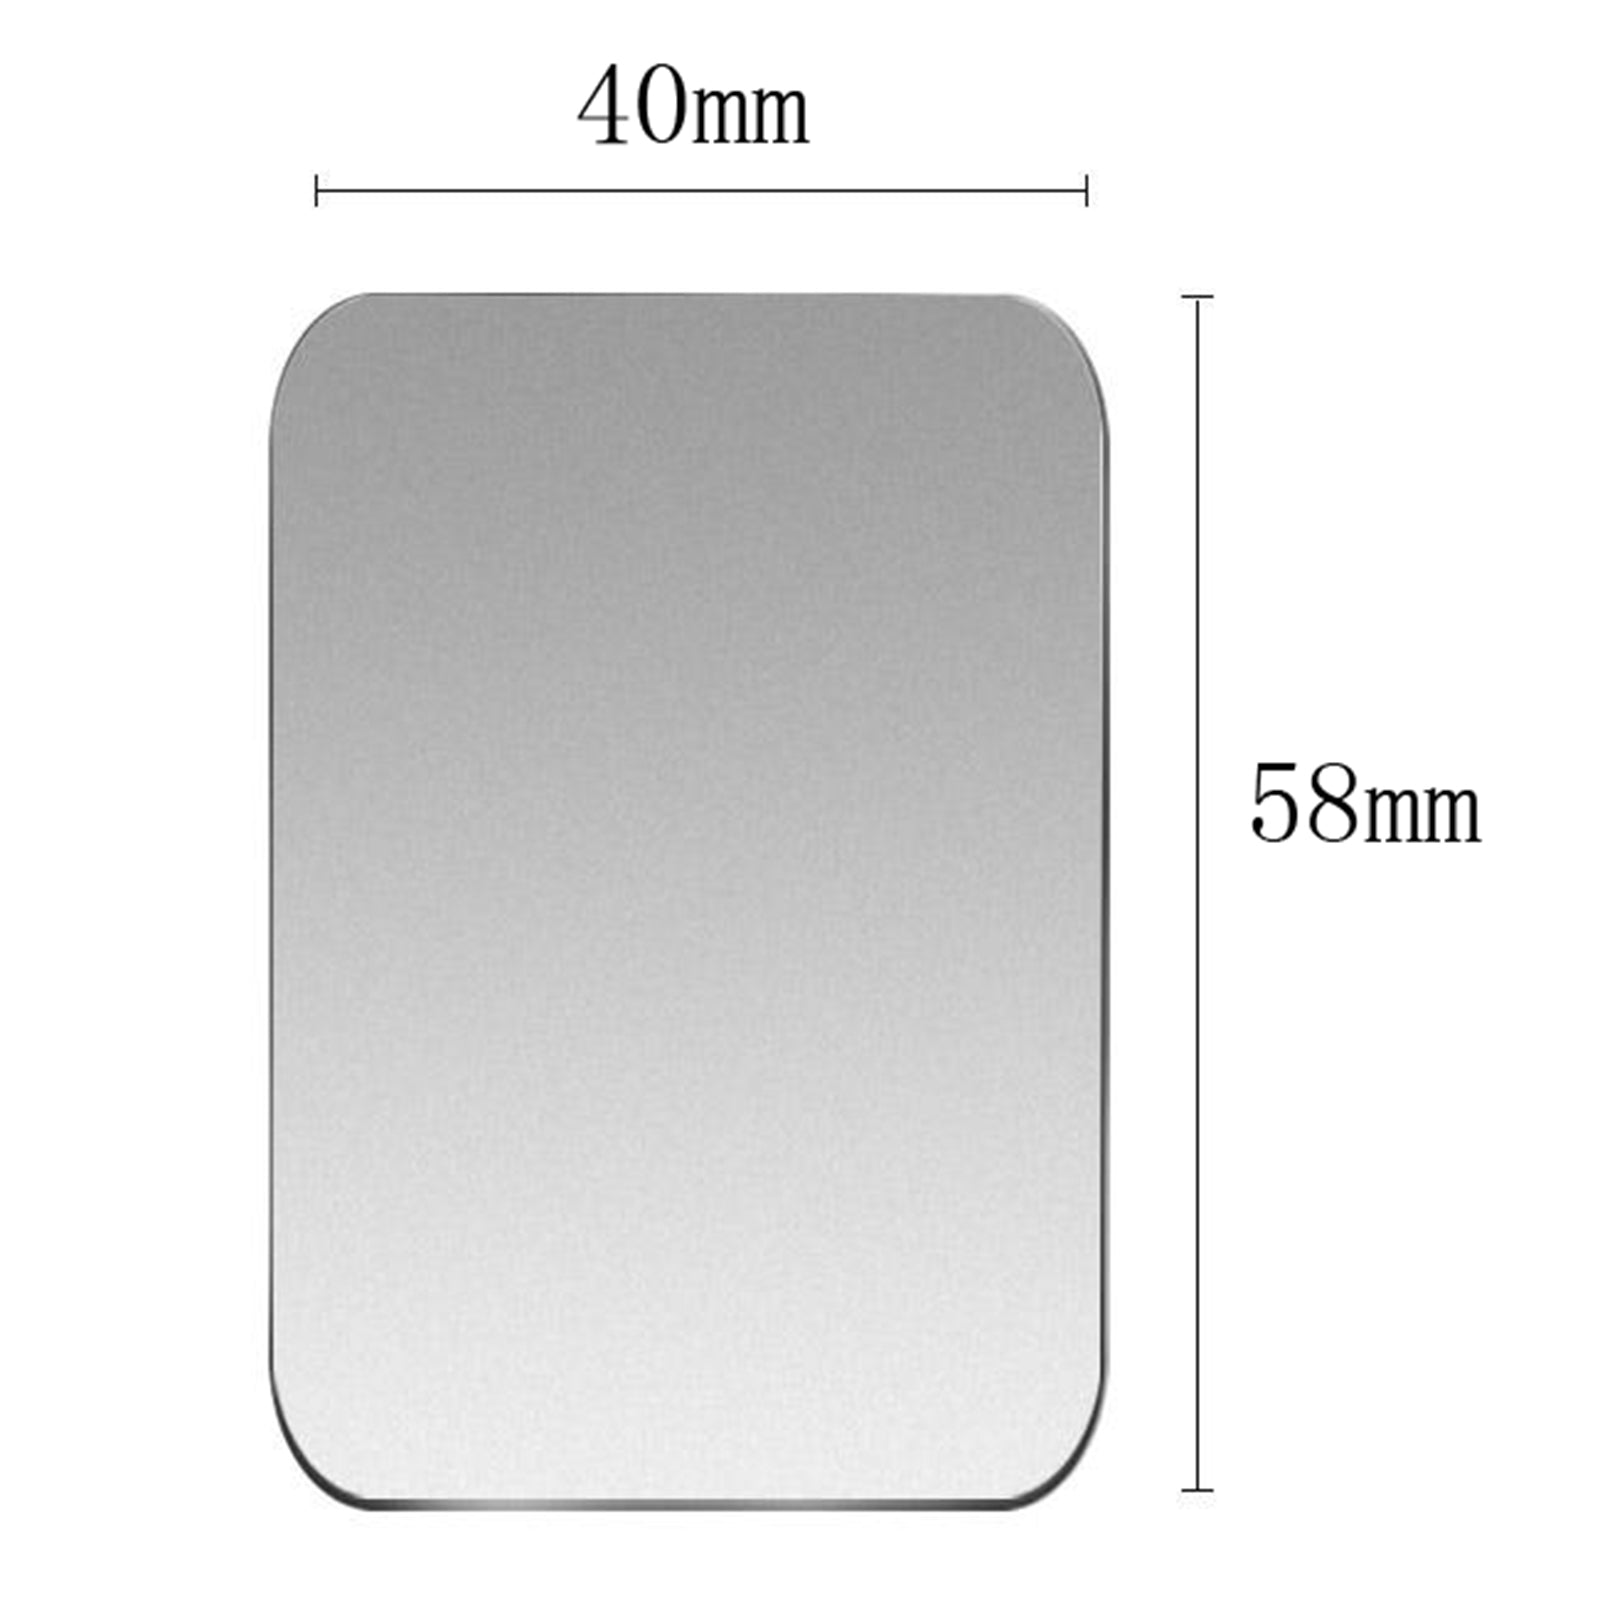 5x Magnetic Aluminum Plate Sheet Disk Holder Air Vent Mount Rectangular